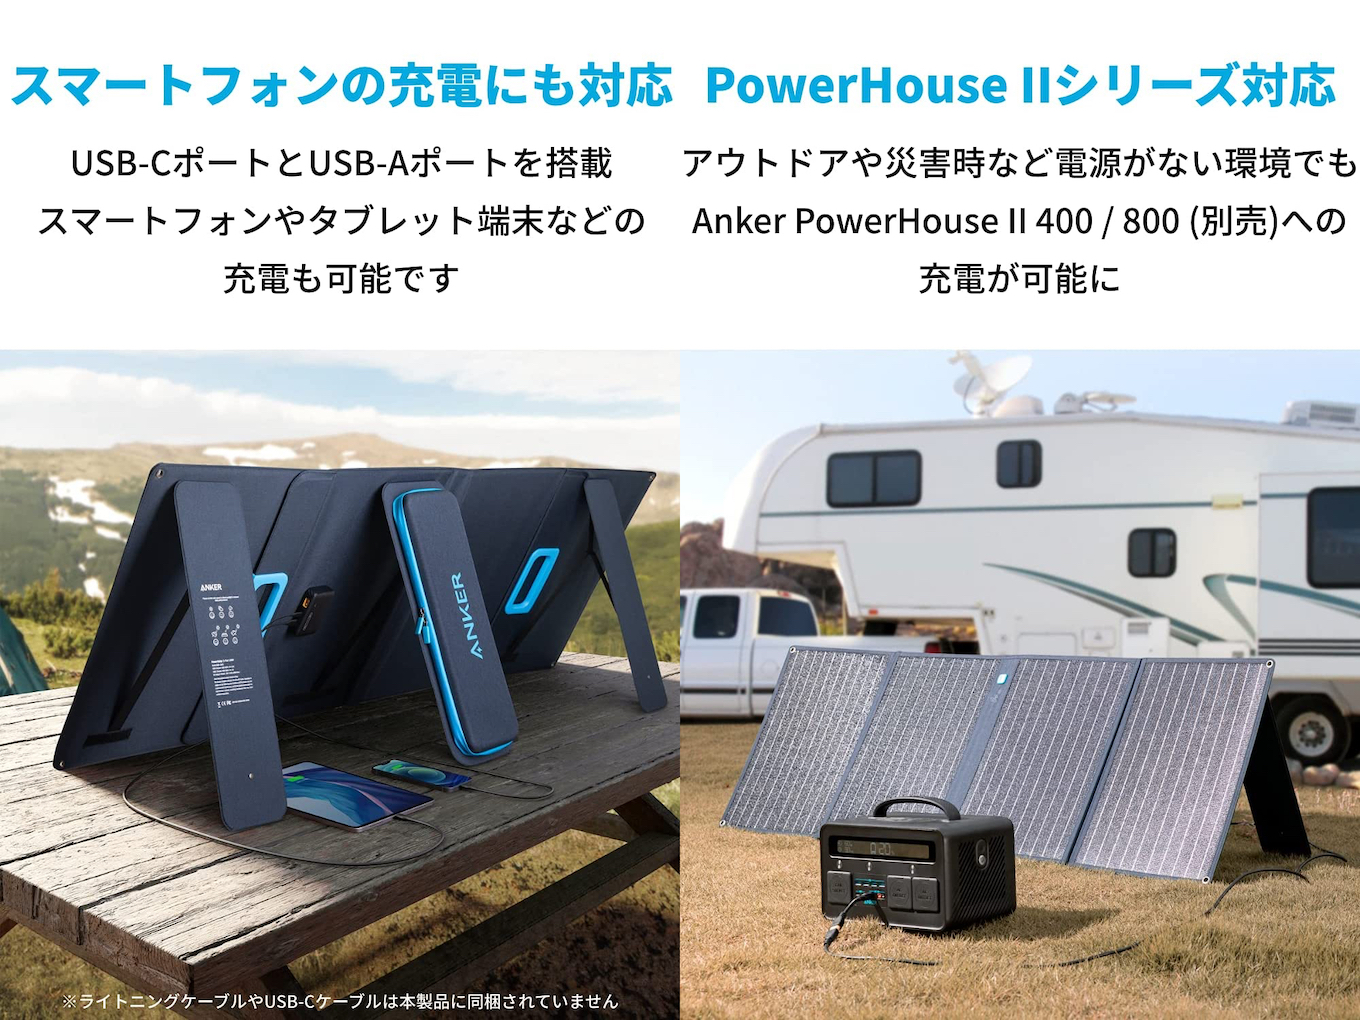 Anker Powerhouse II 800